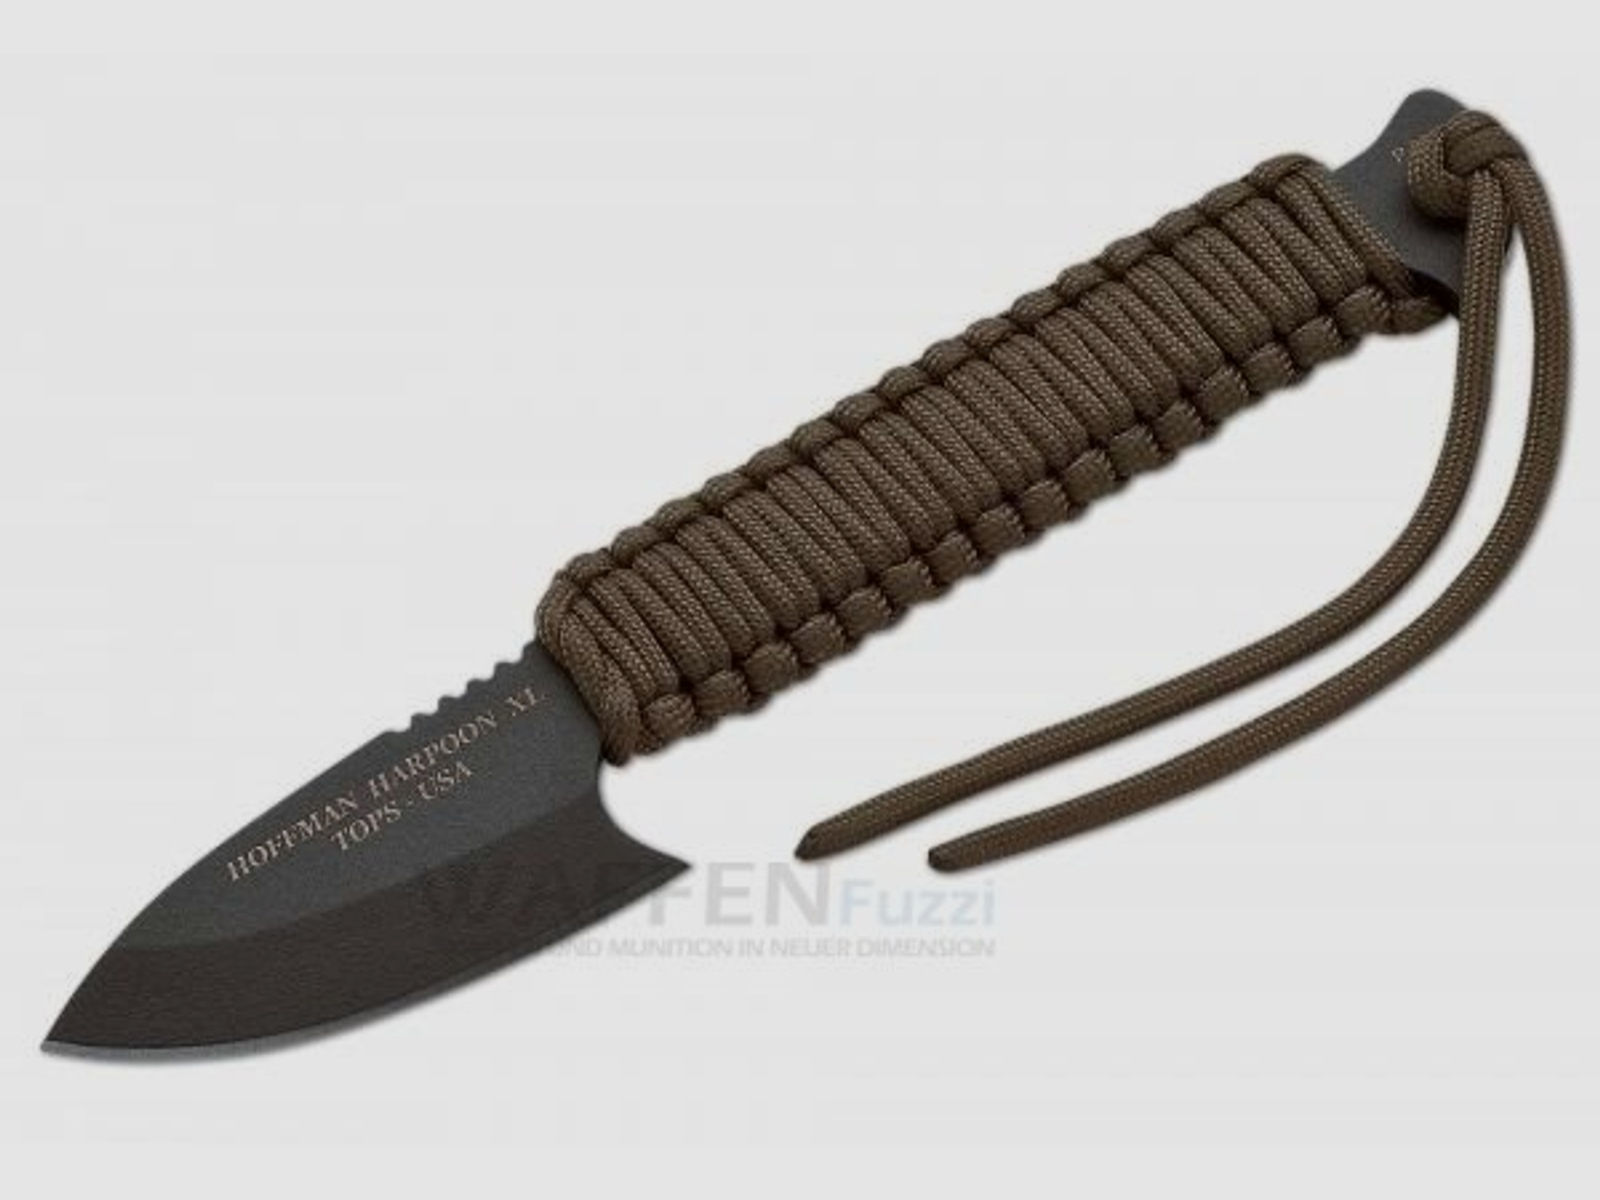 TOPS Knives Hoffman Harpoon XL Survival Messer